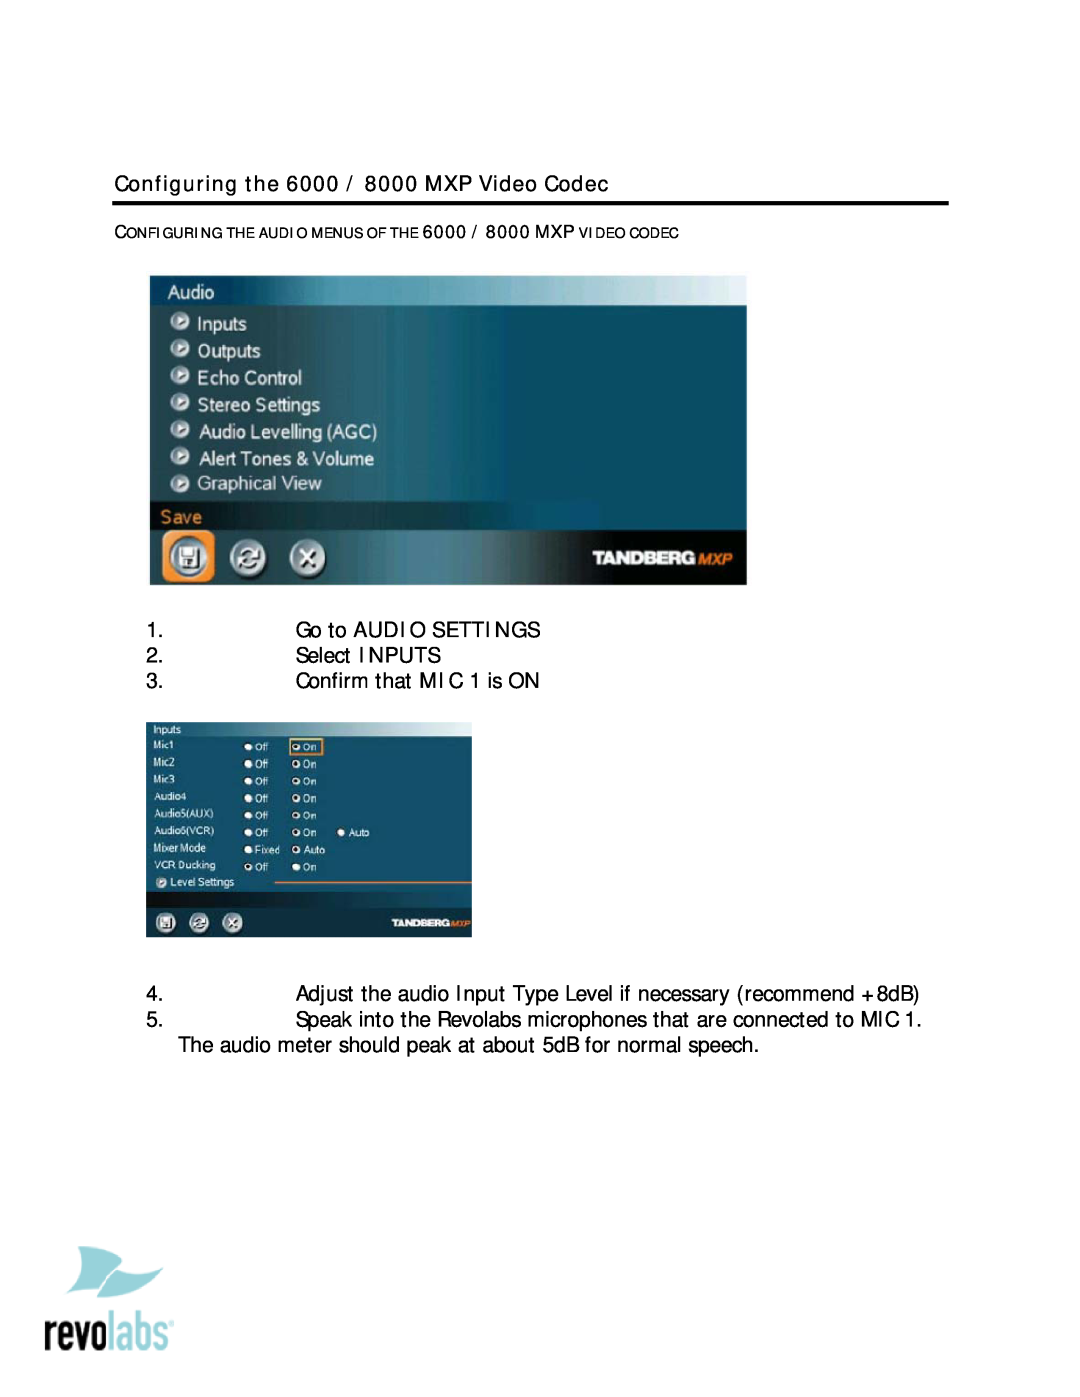 Revolabs Tandberg 6000 setup guide Configuring the 6000 / 8000 MXP Video Codec, Go to AUDIO SETTINGS 